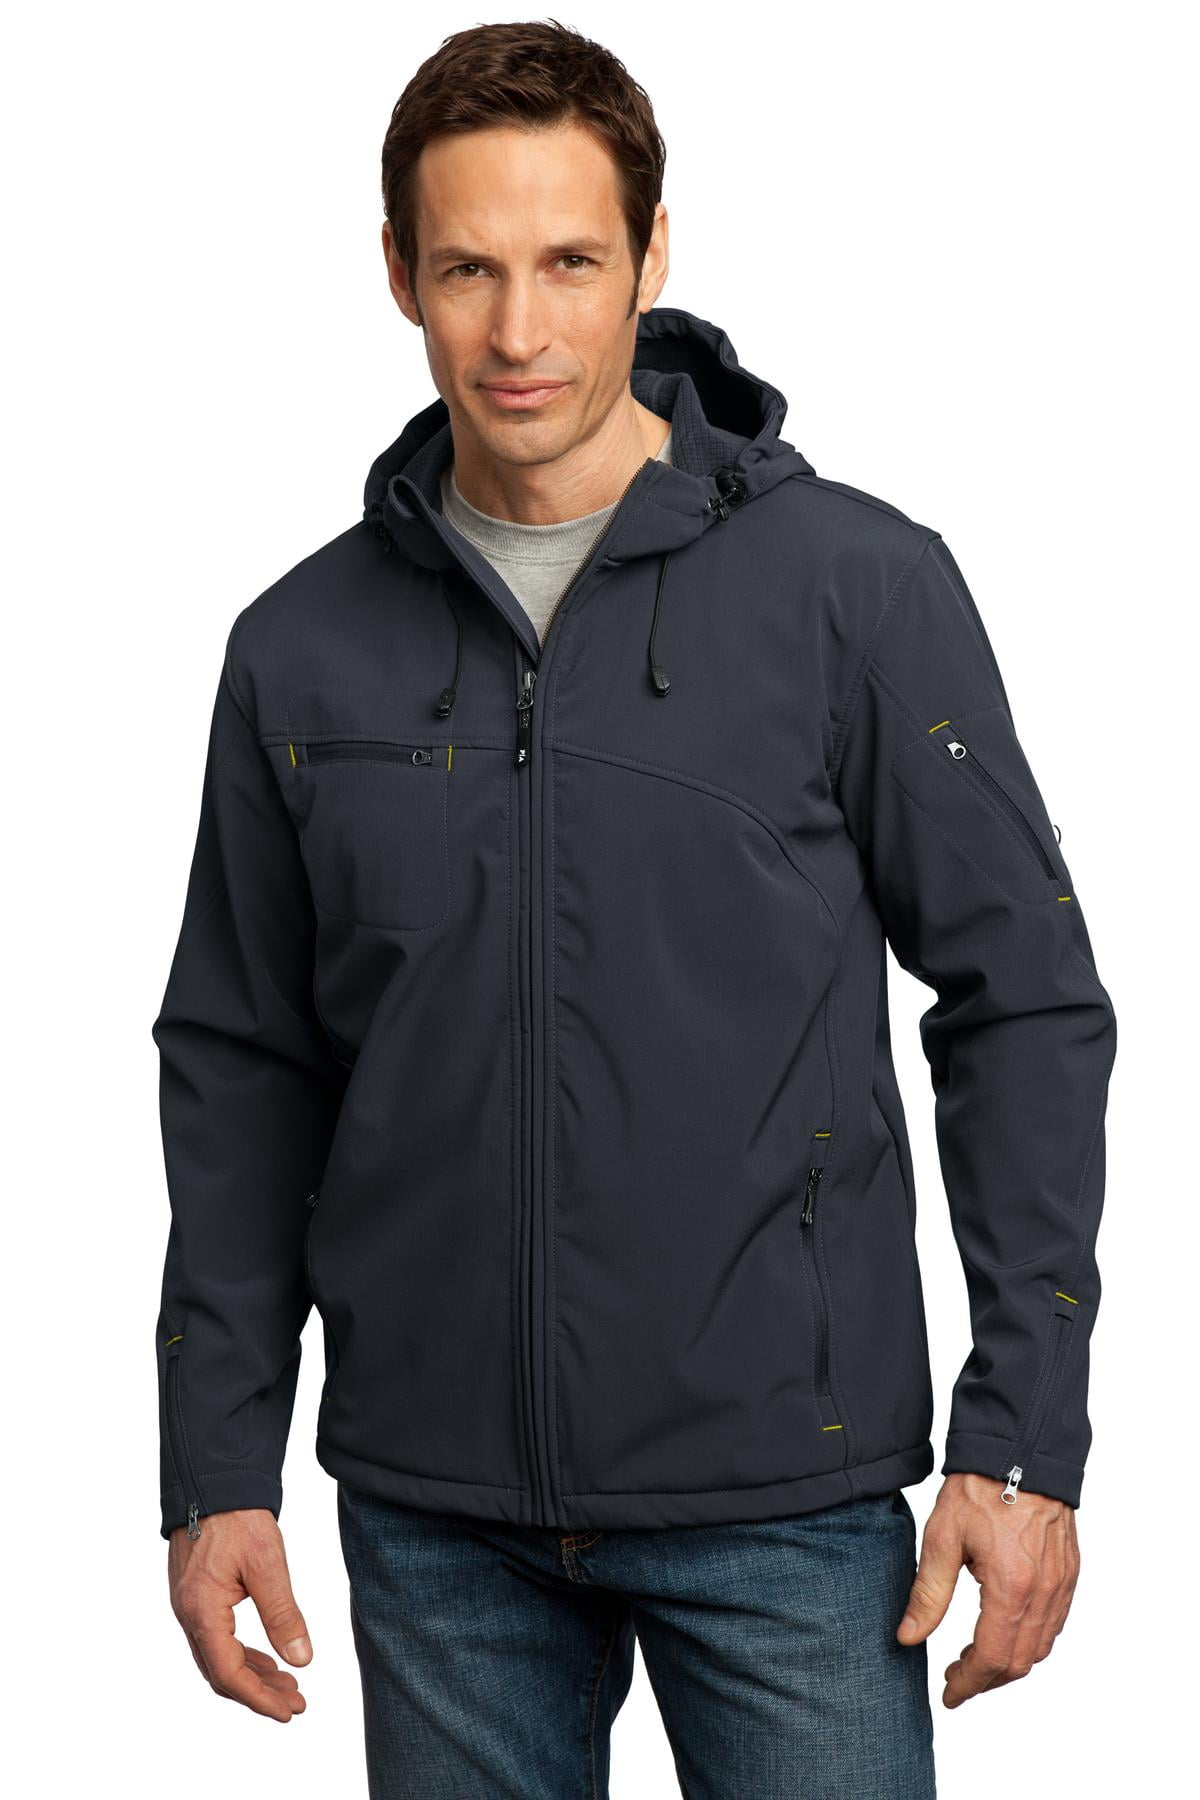 Port Authority Men's Textured Hooded Soft Shell Jacket. J706 - Walmart.com